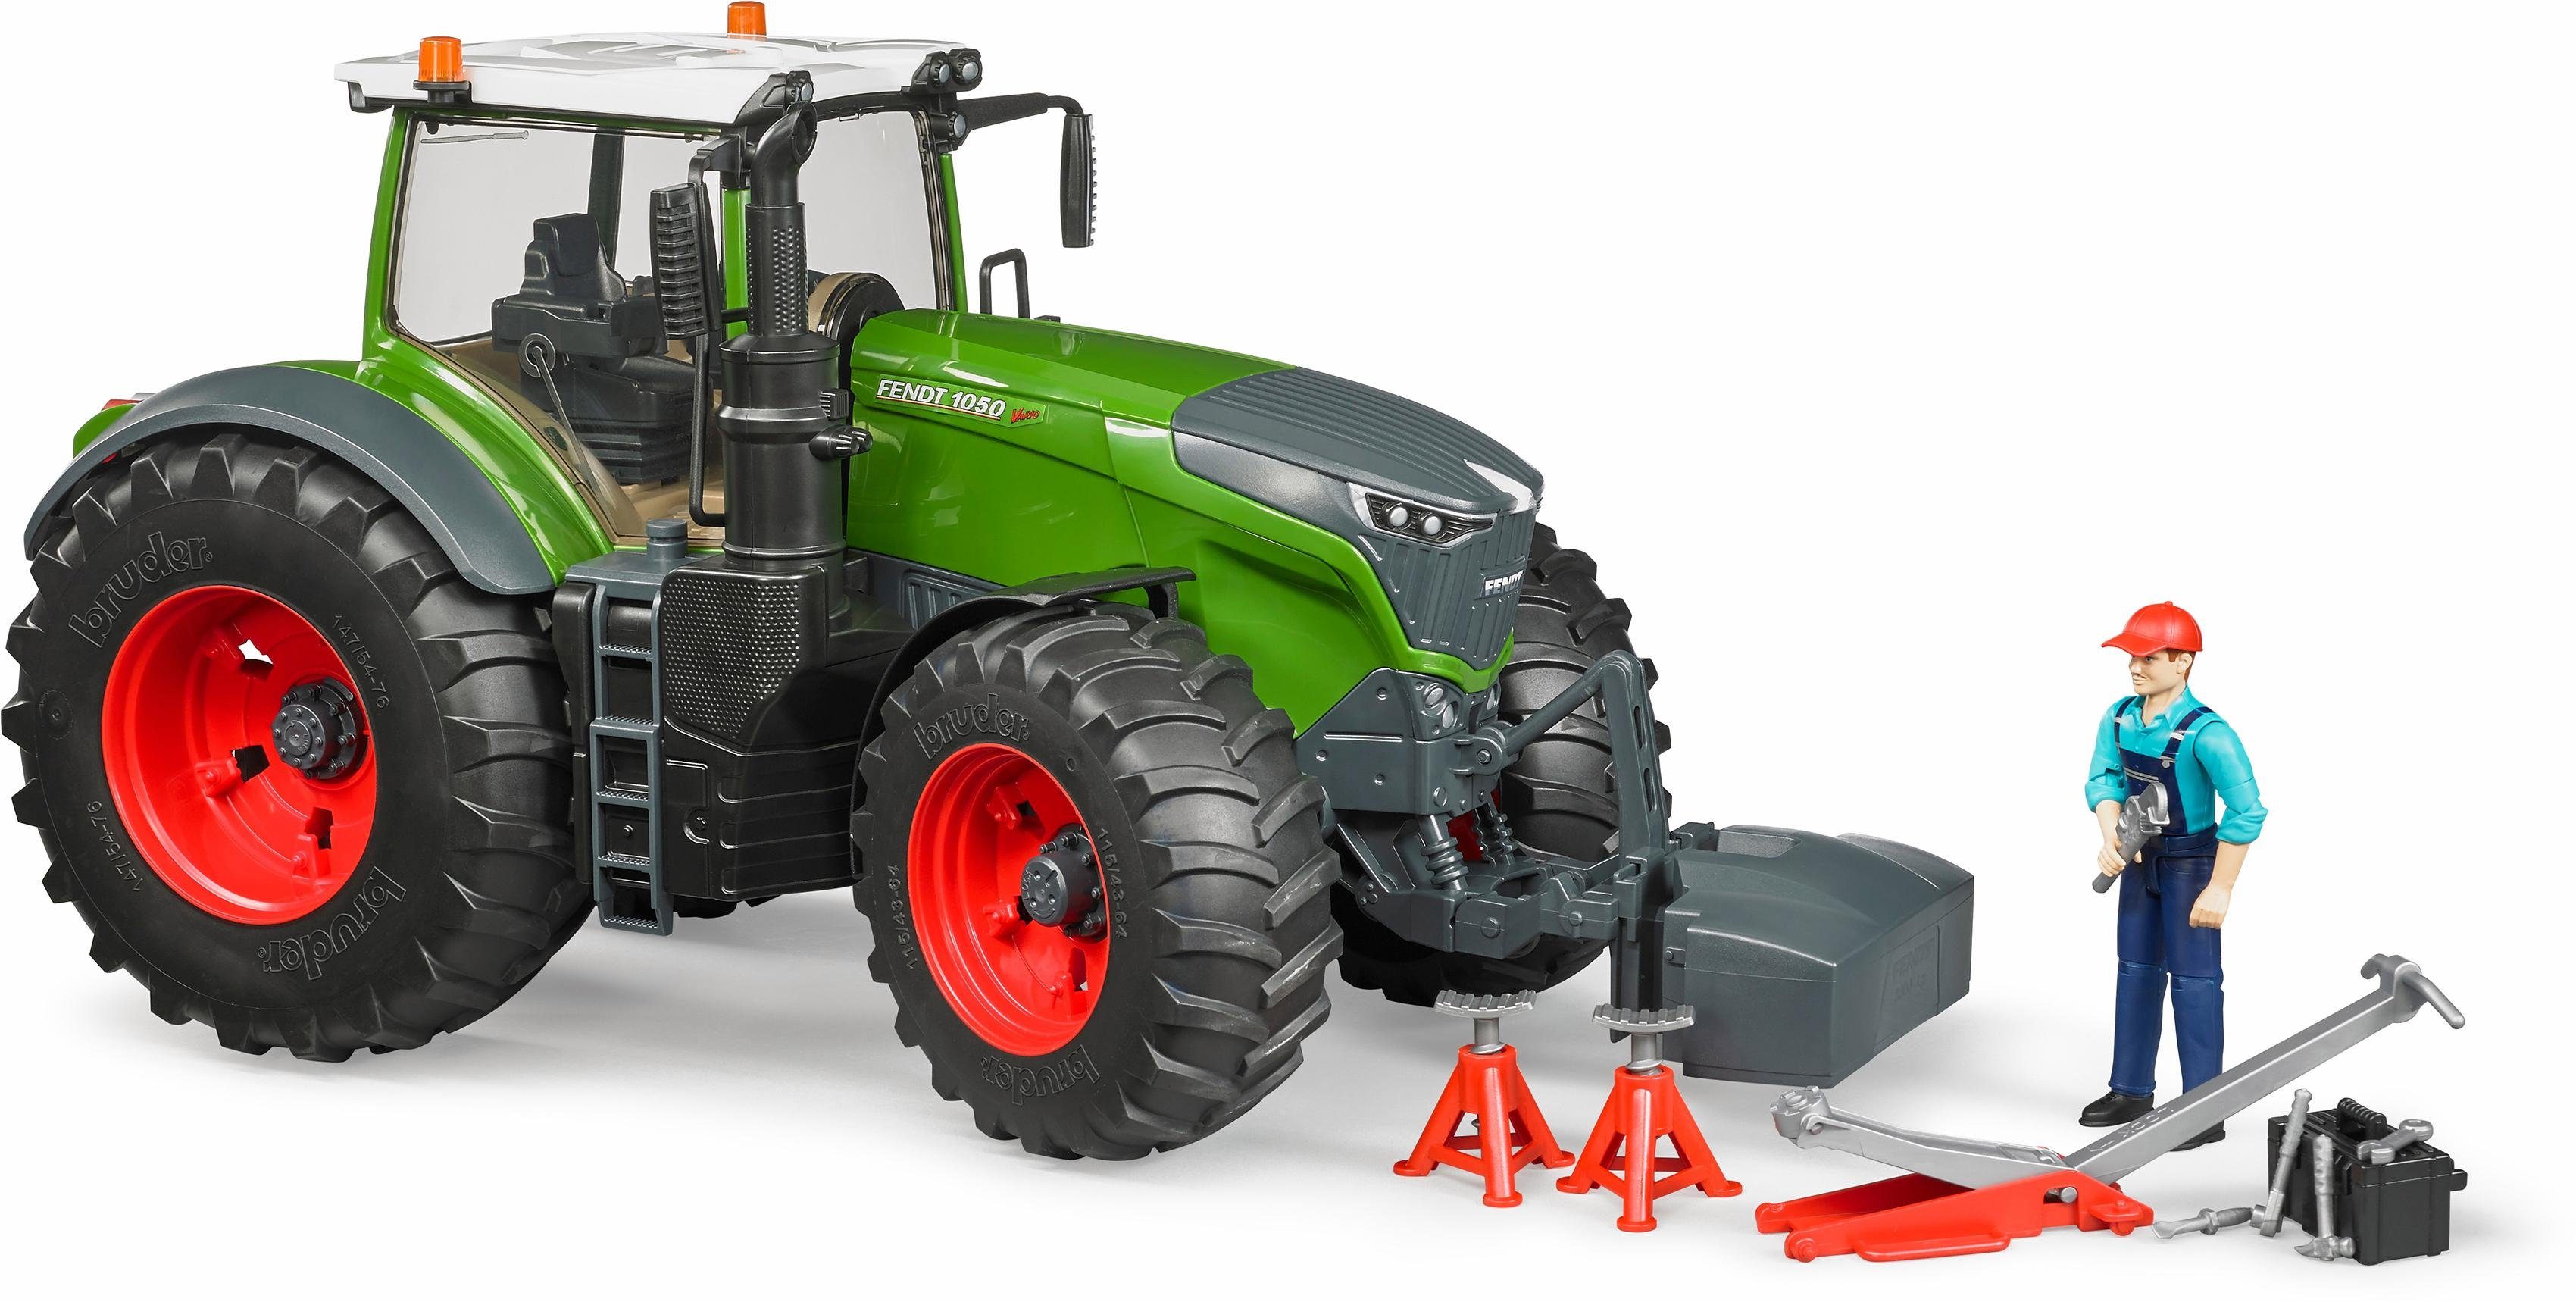 Germany 1:16, Bruder® in Spielzeug-Traktor Made grün, 1050 Vario, Fendt